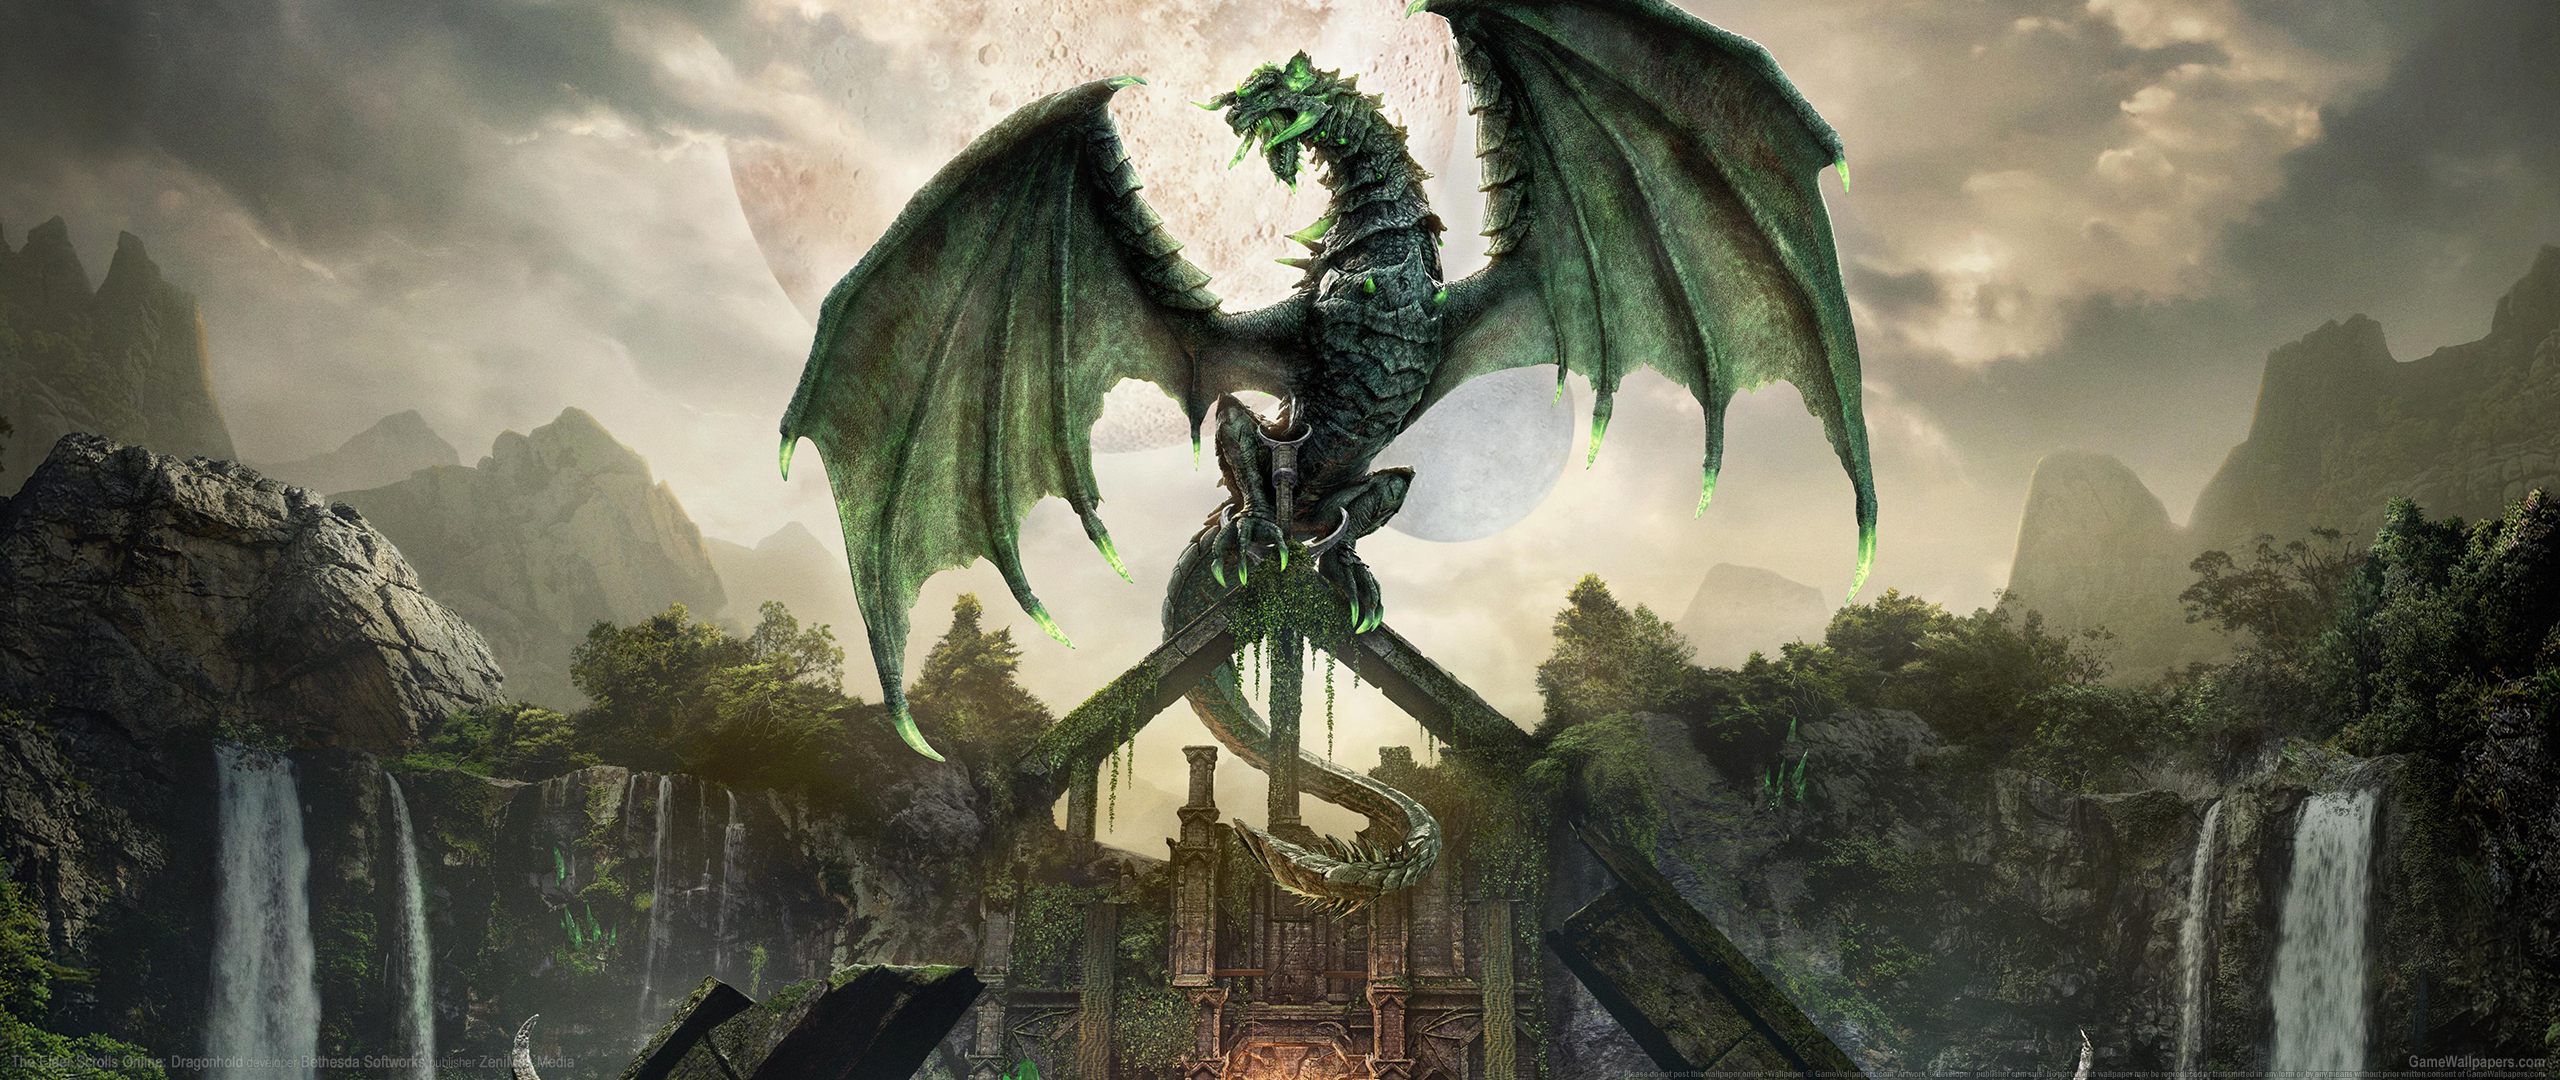 The Elder Scrolls Online: Dragonhold 2560x1080 wallpaper or background 01